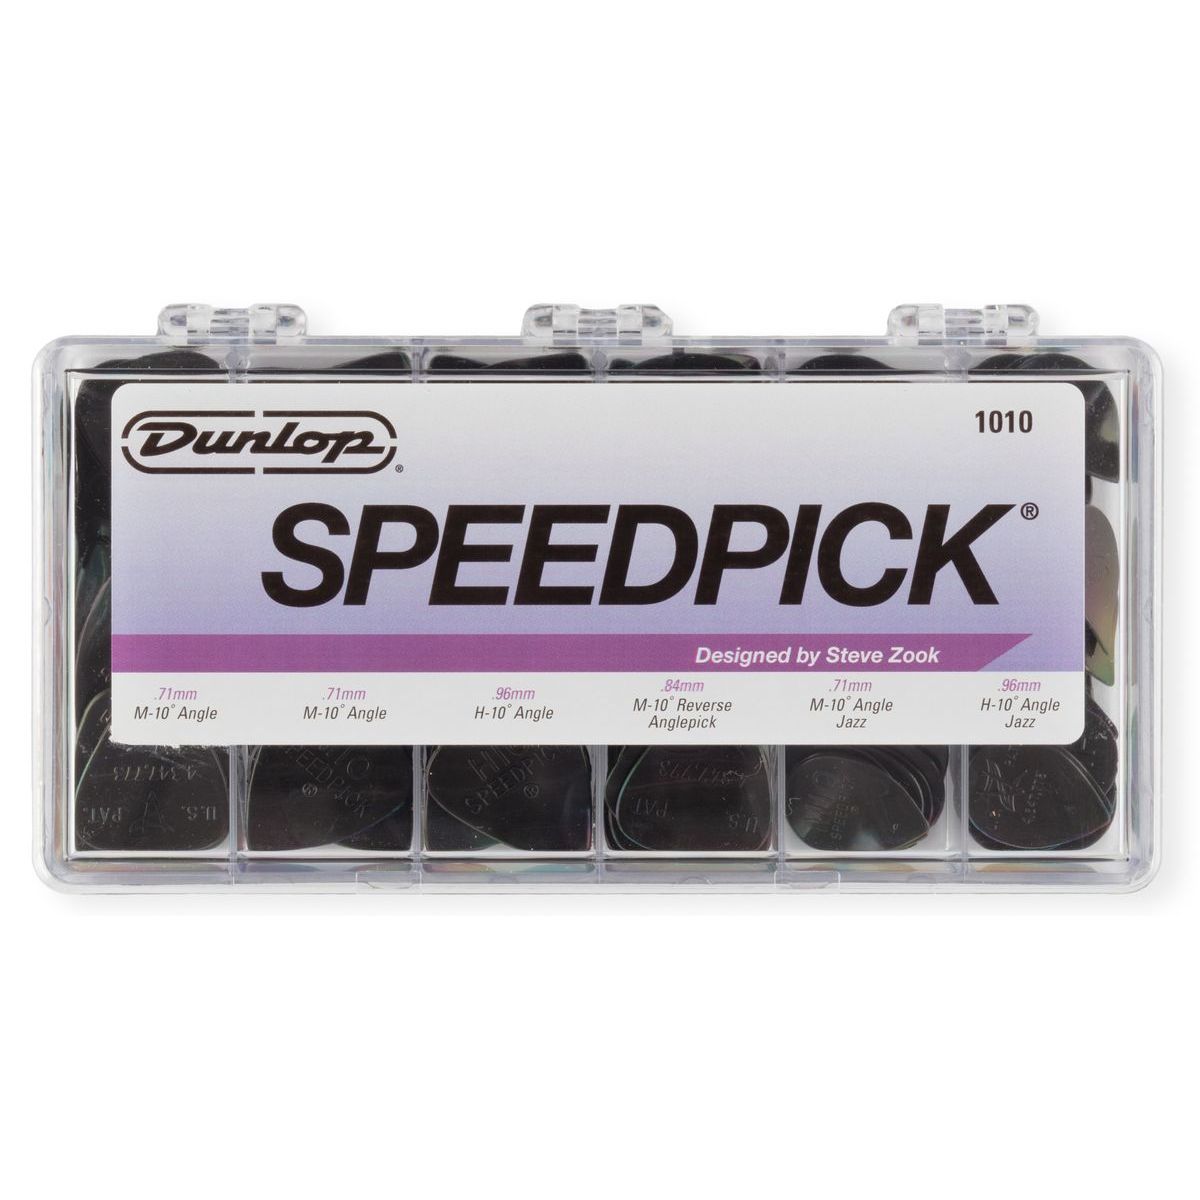 Медиаторы Dunlop 1010 Speedpick Display (144 шт) медиаторы dunlop 1010 speedpick display 144 шт